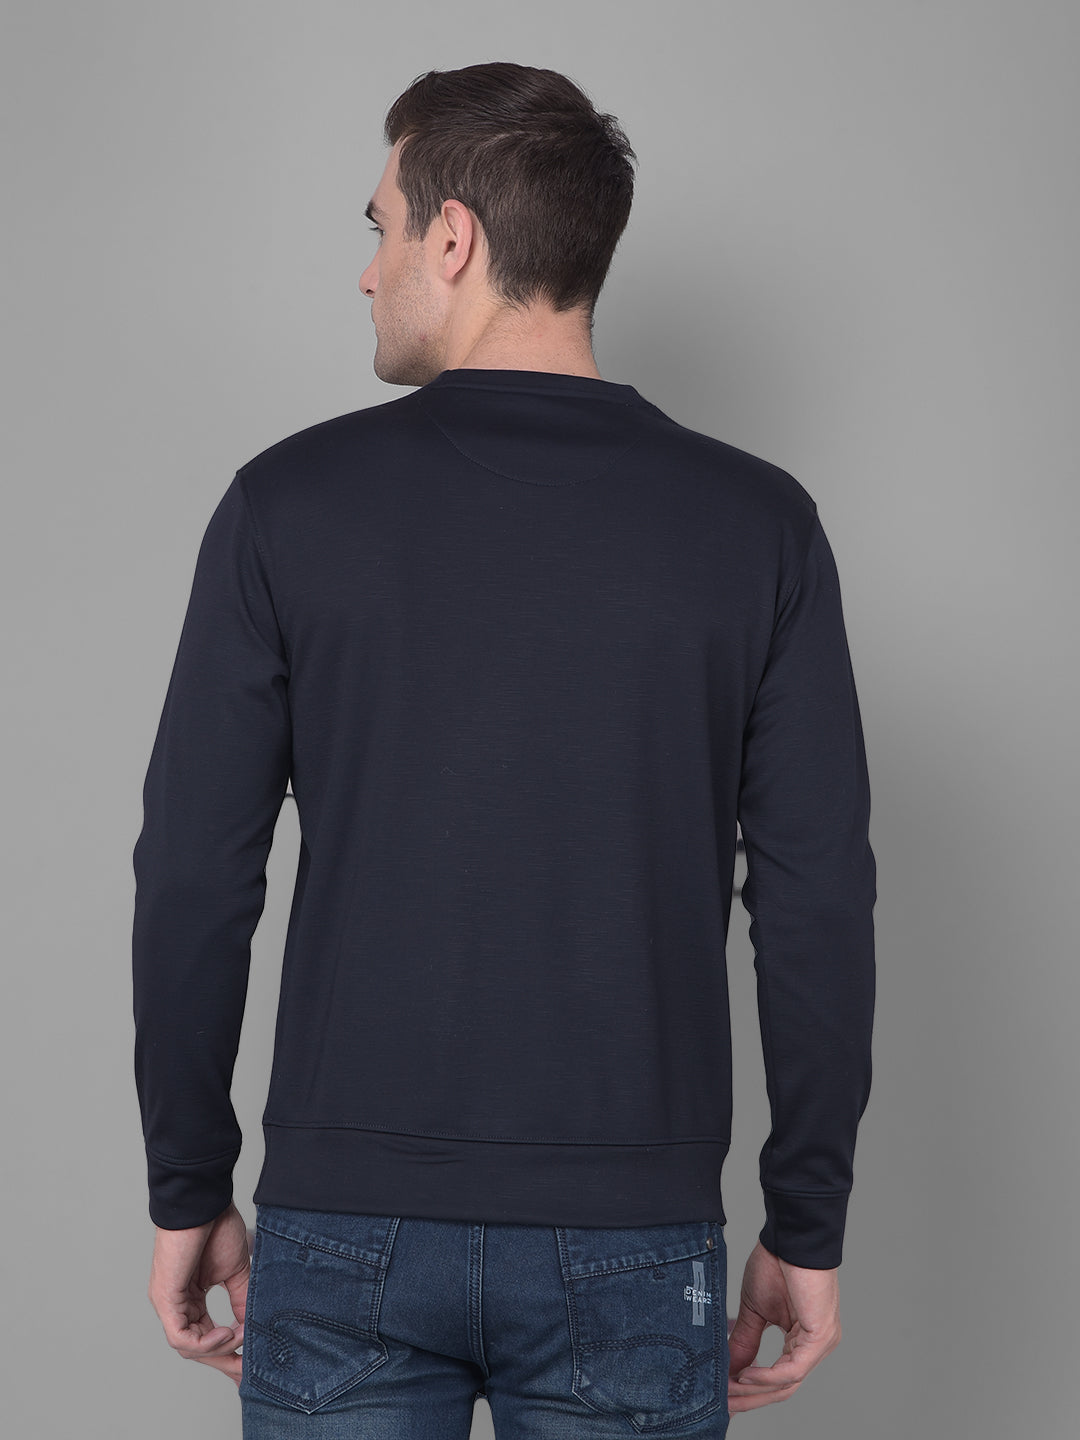 cobb navy printed round neck sweatshirt